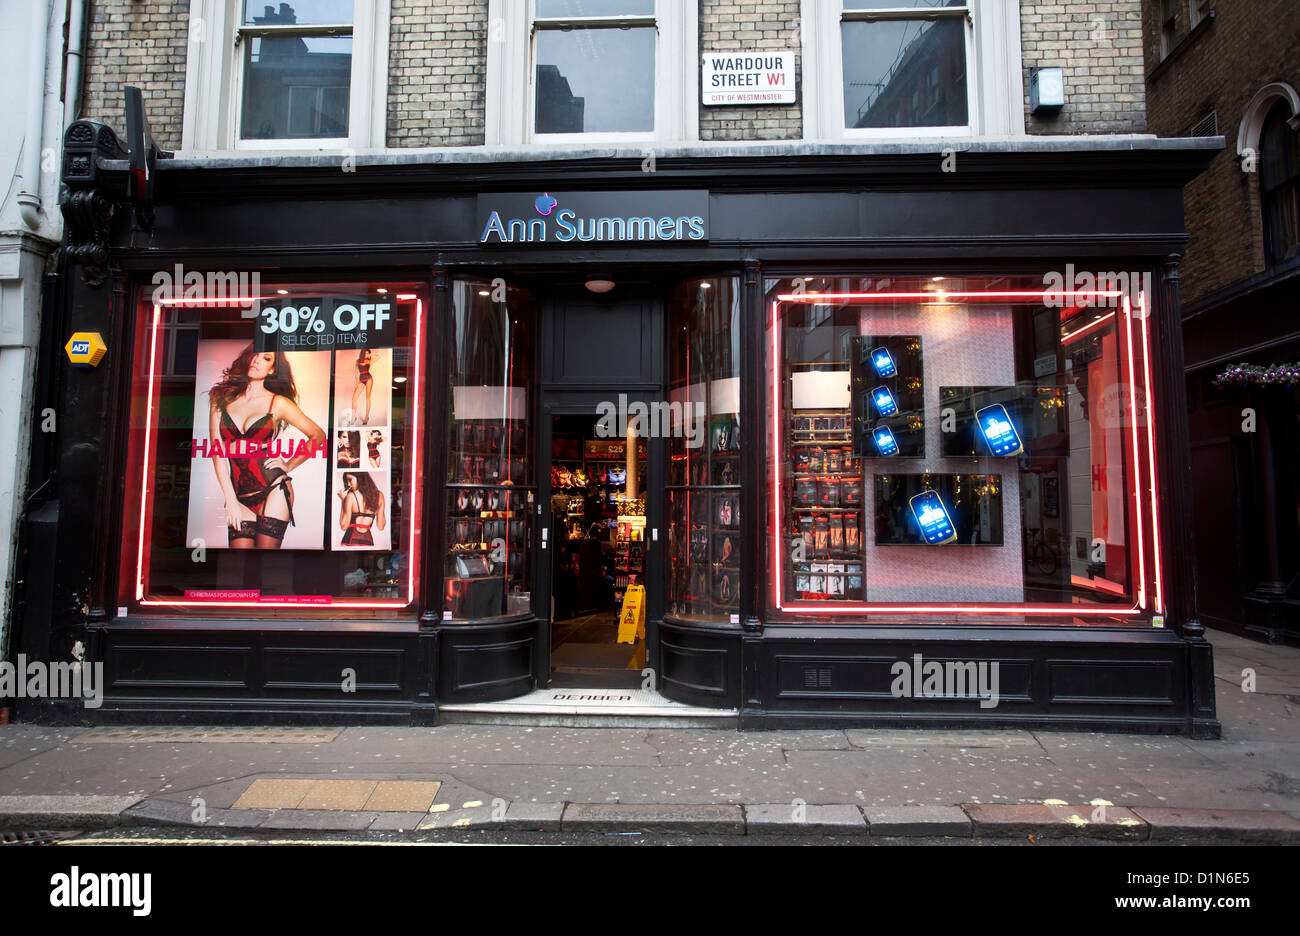 Ann Summer Store front, Wardour Street, London, England, UK Stock Photo